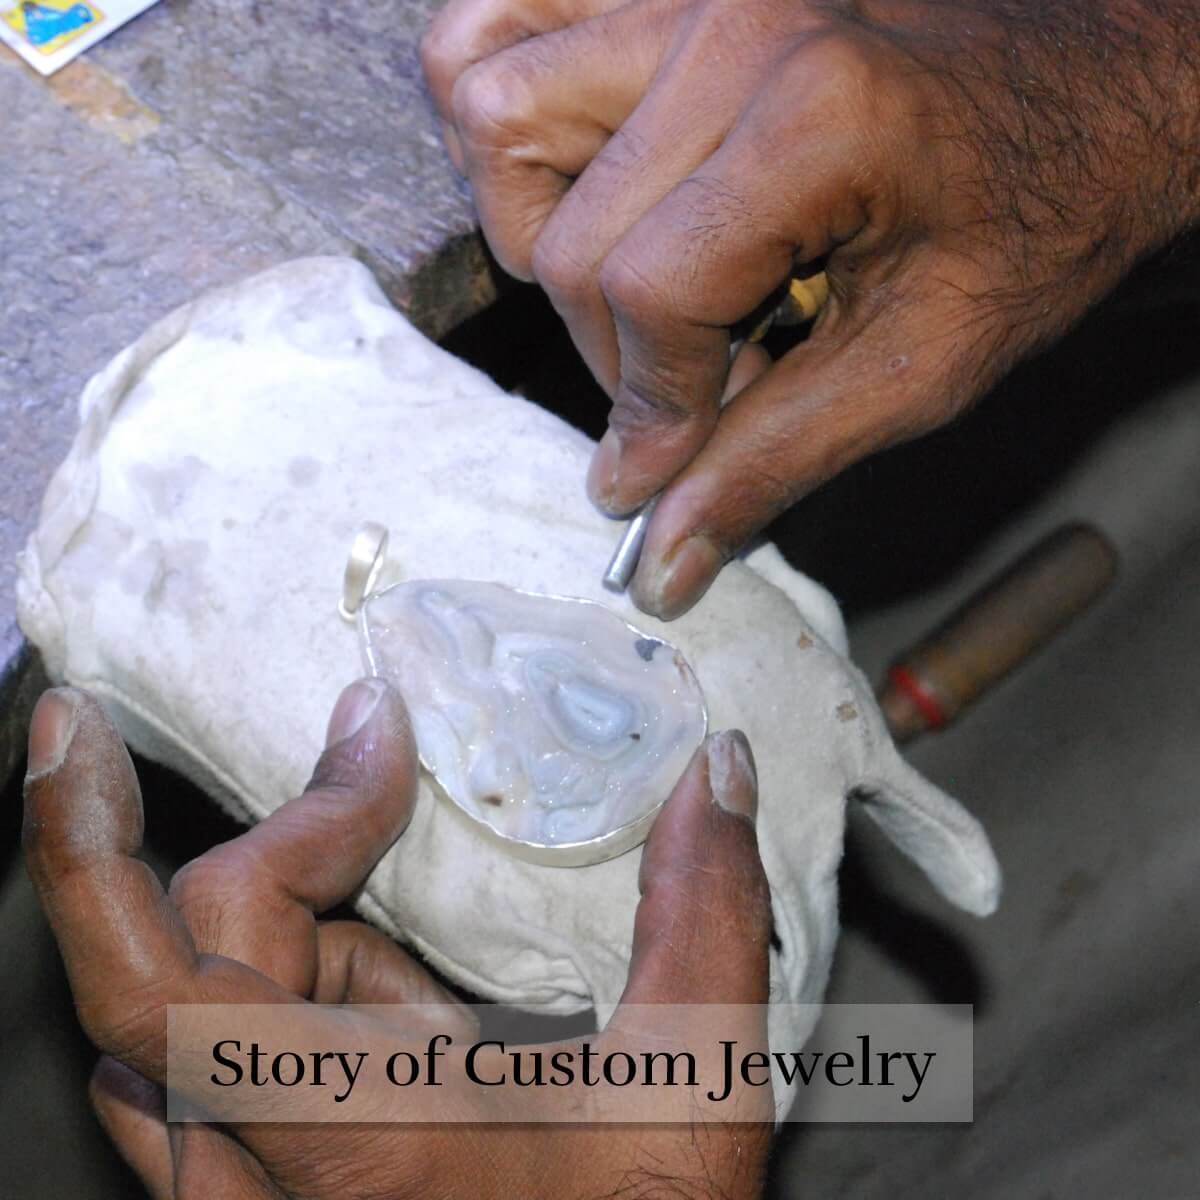 What is custom jewelry